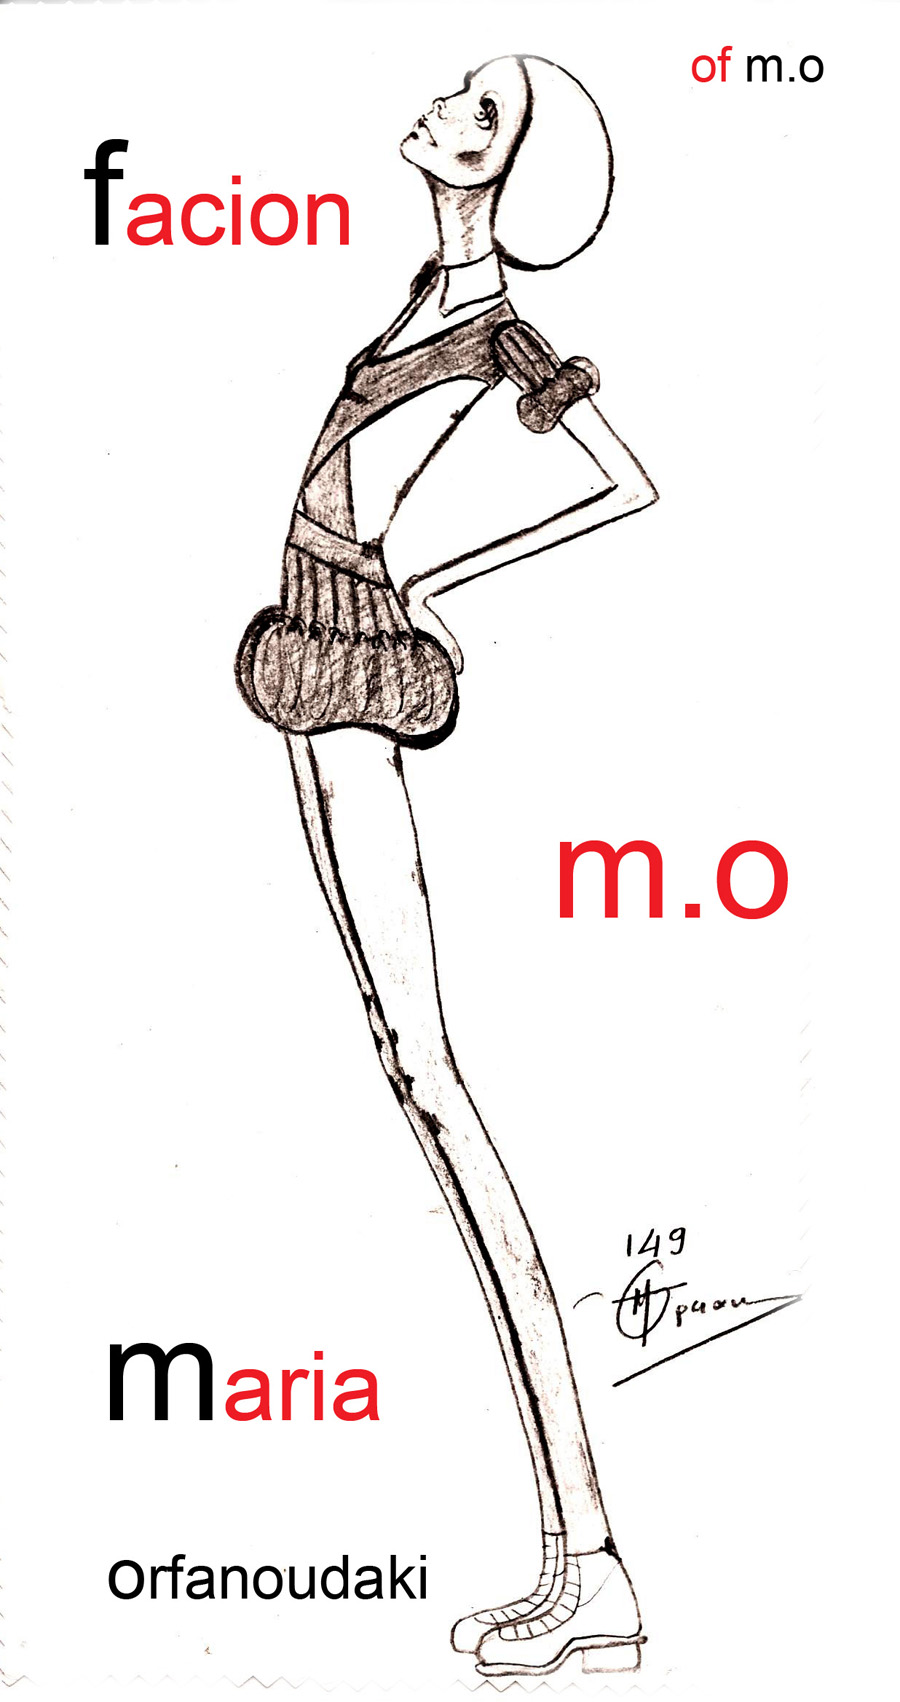 fashion-mode-maria-orfanoudaki-mo-50